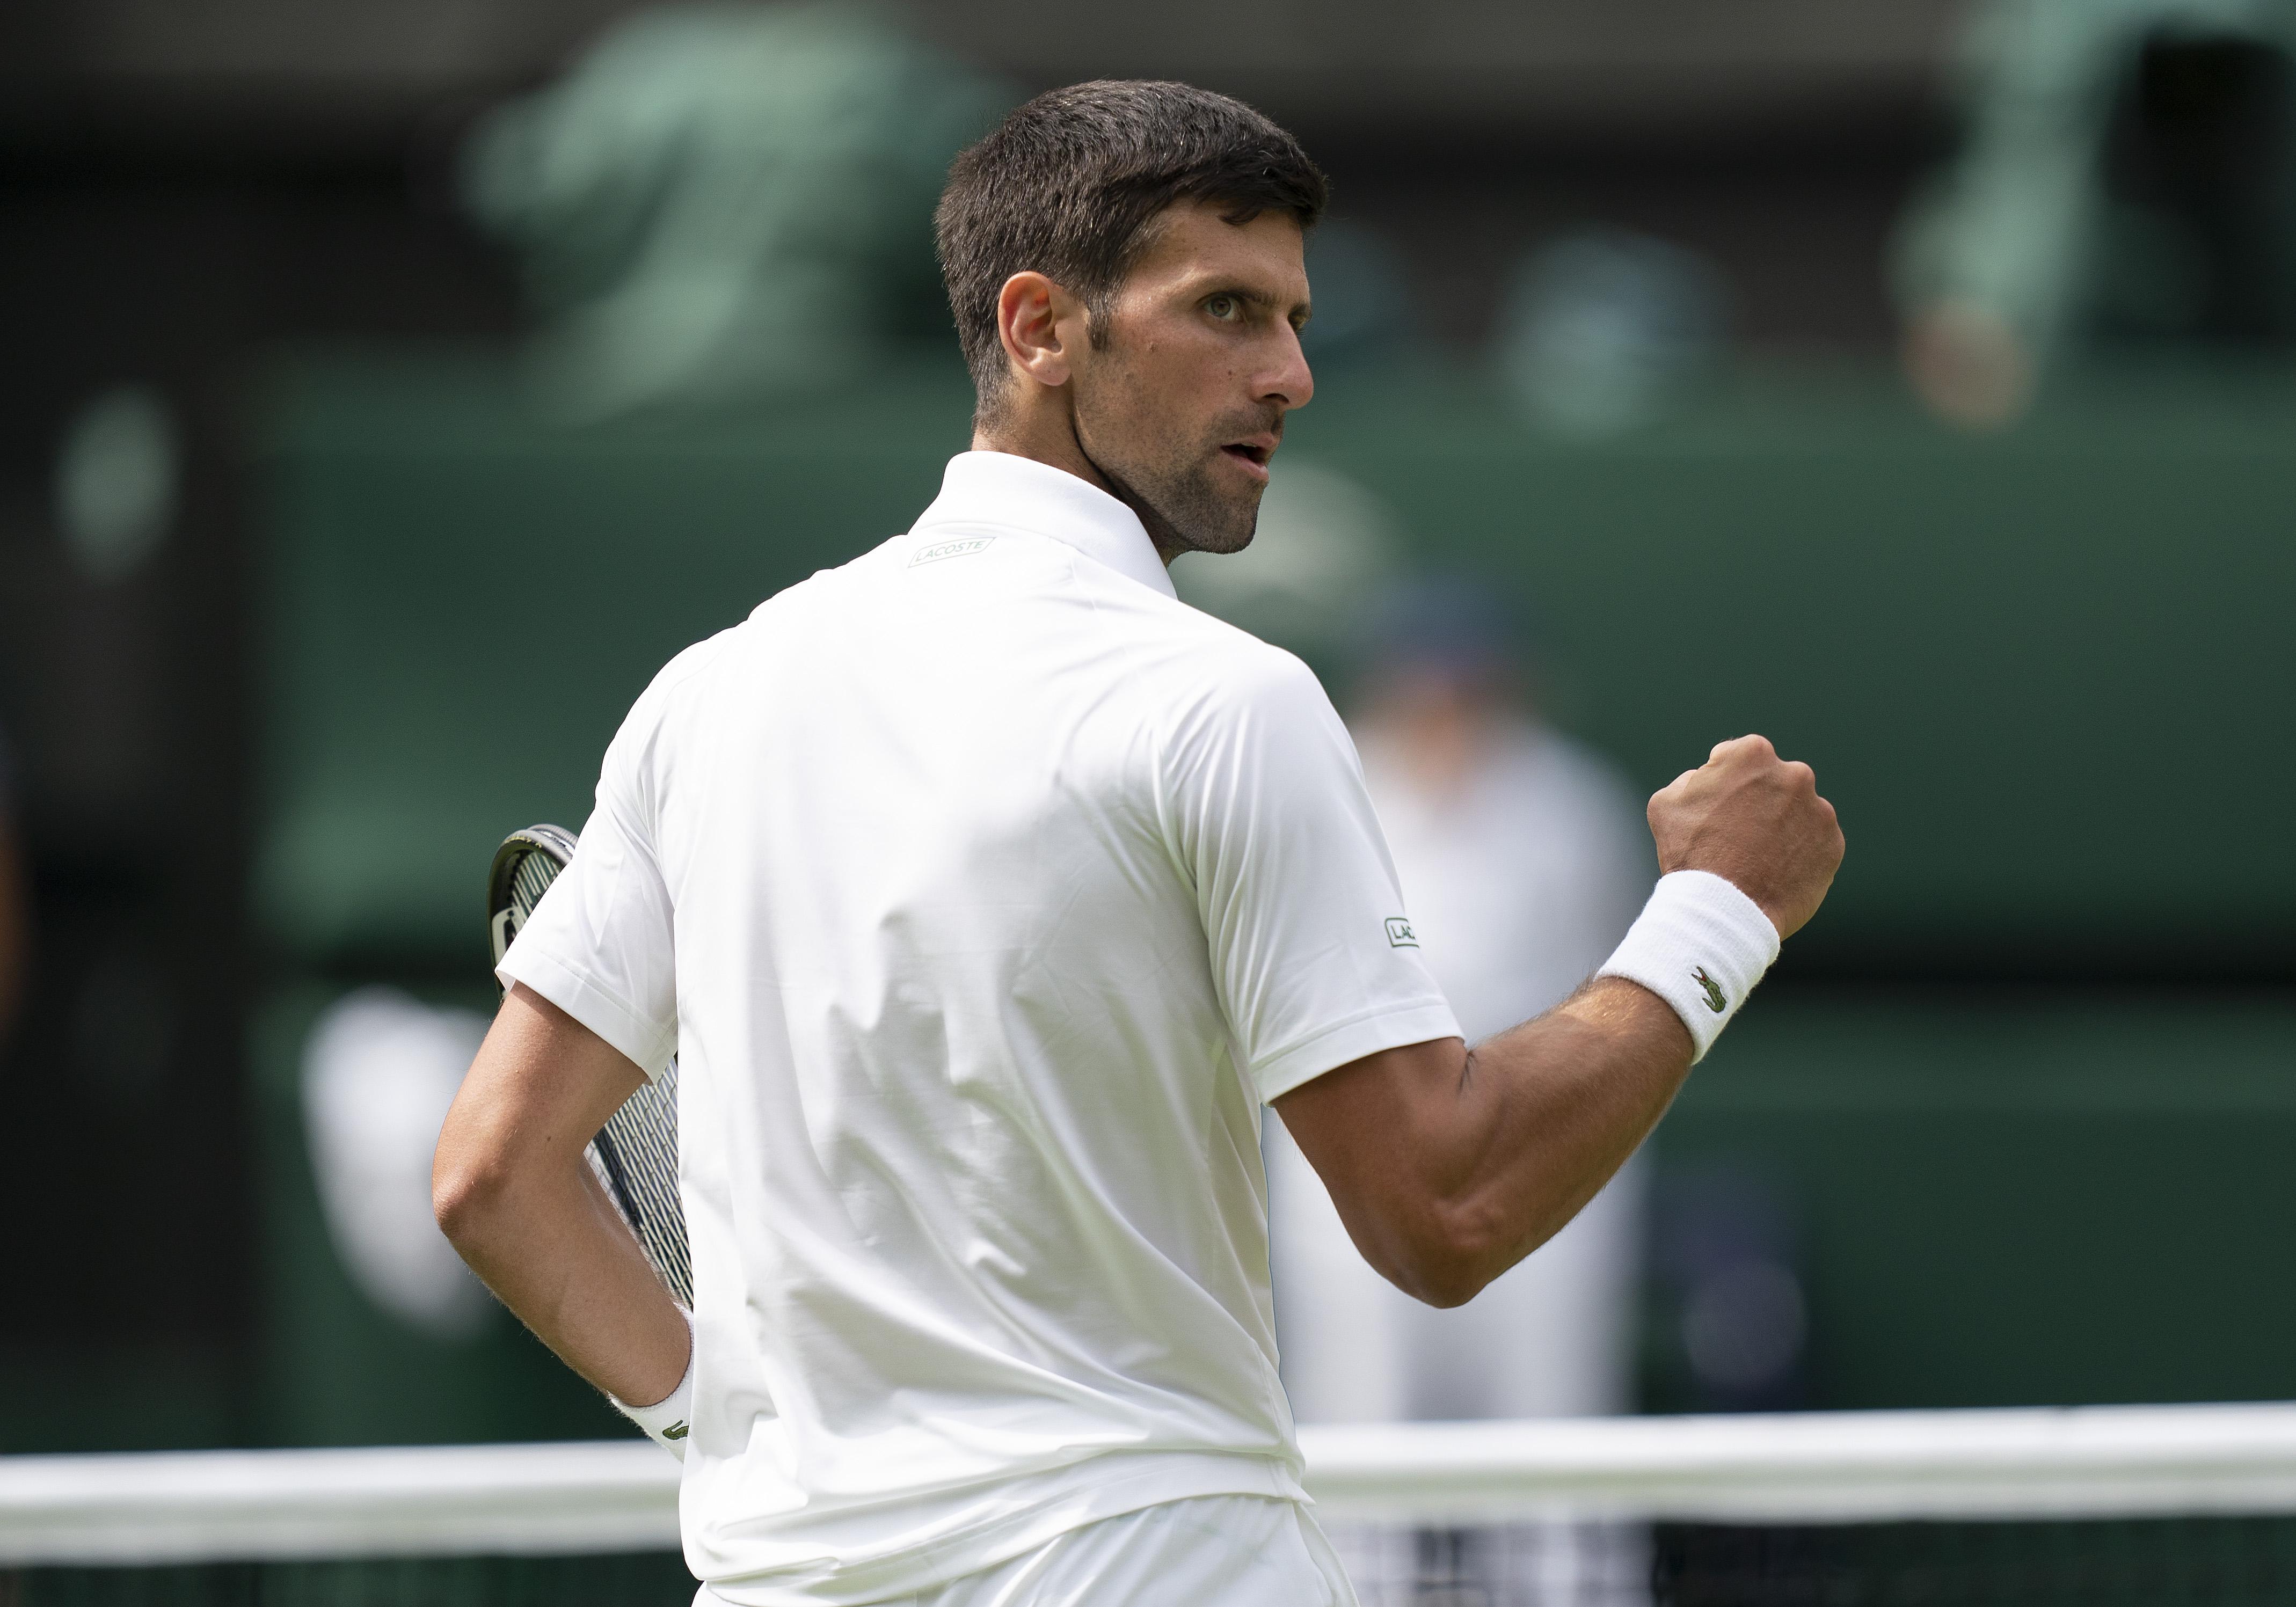 Novak Djokovic vs Miomir Kecmanovic Odds, Prediction and Betting Trends for 2022 Wimbledon Men's Round 3 Match